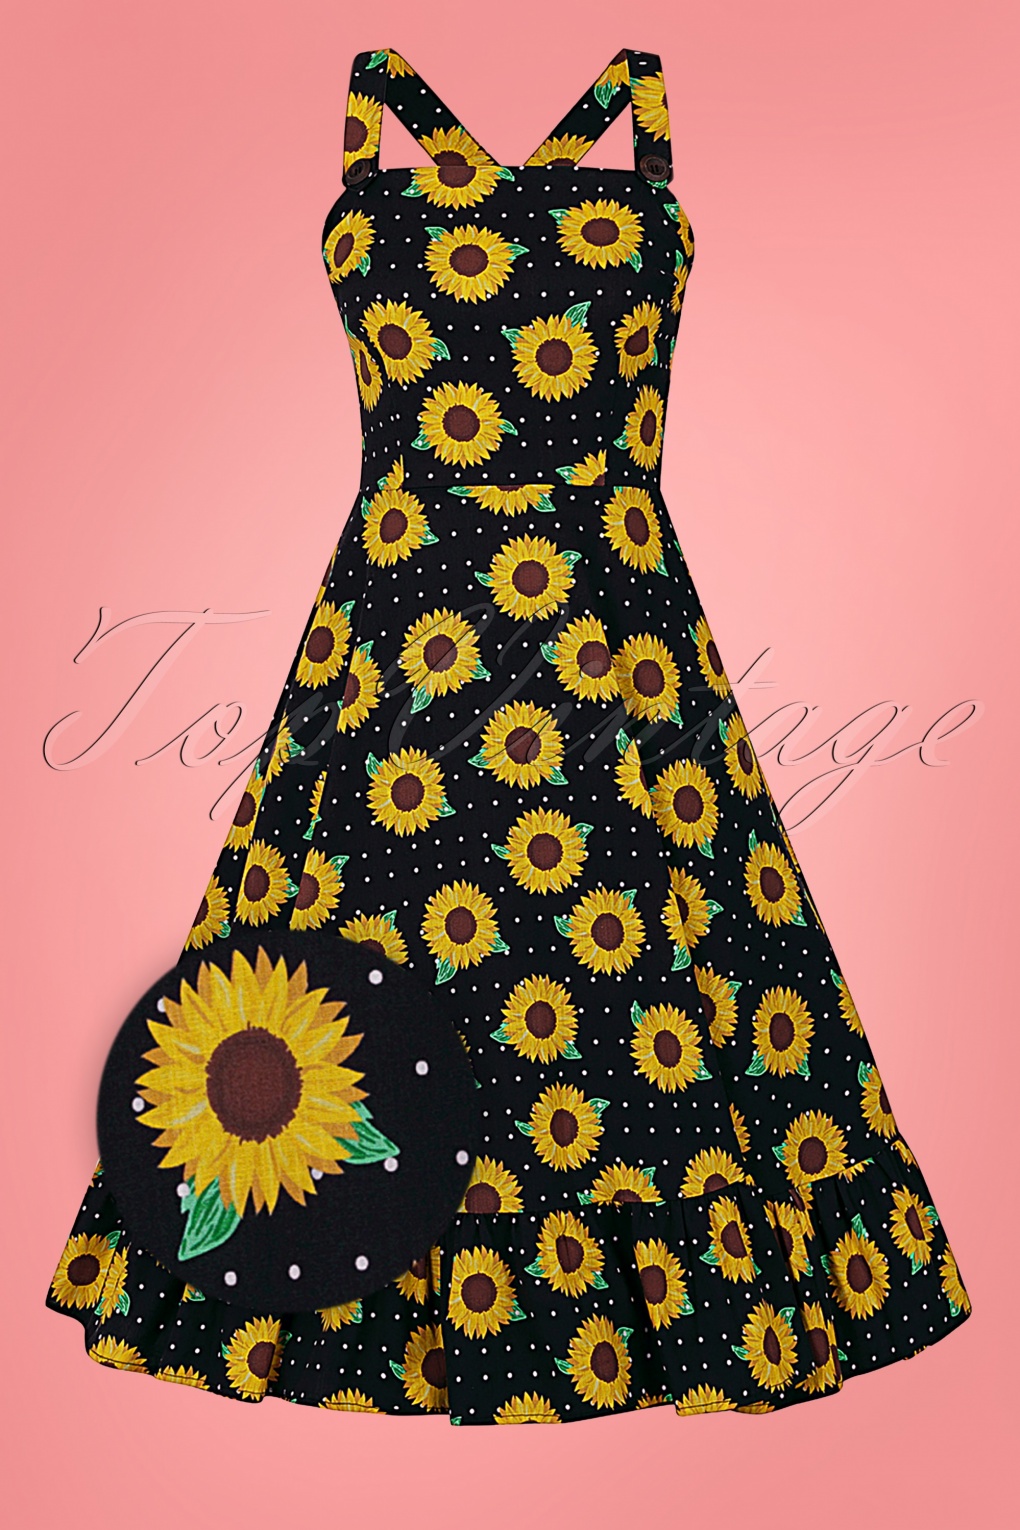 sunflower black dress